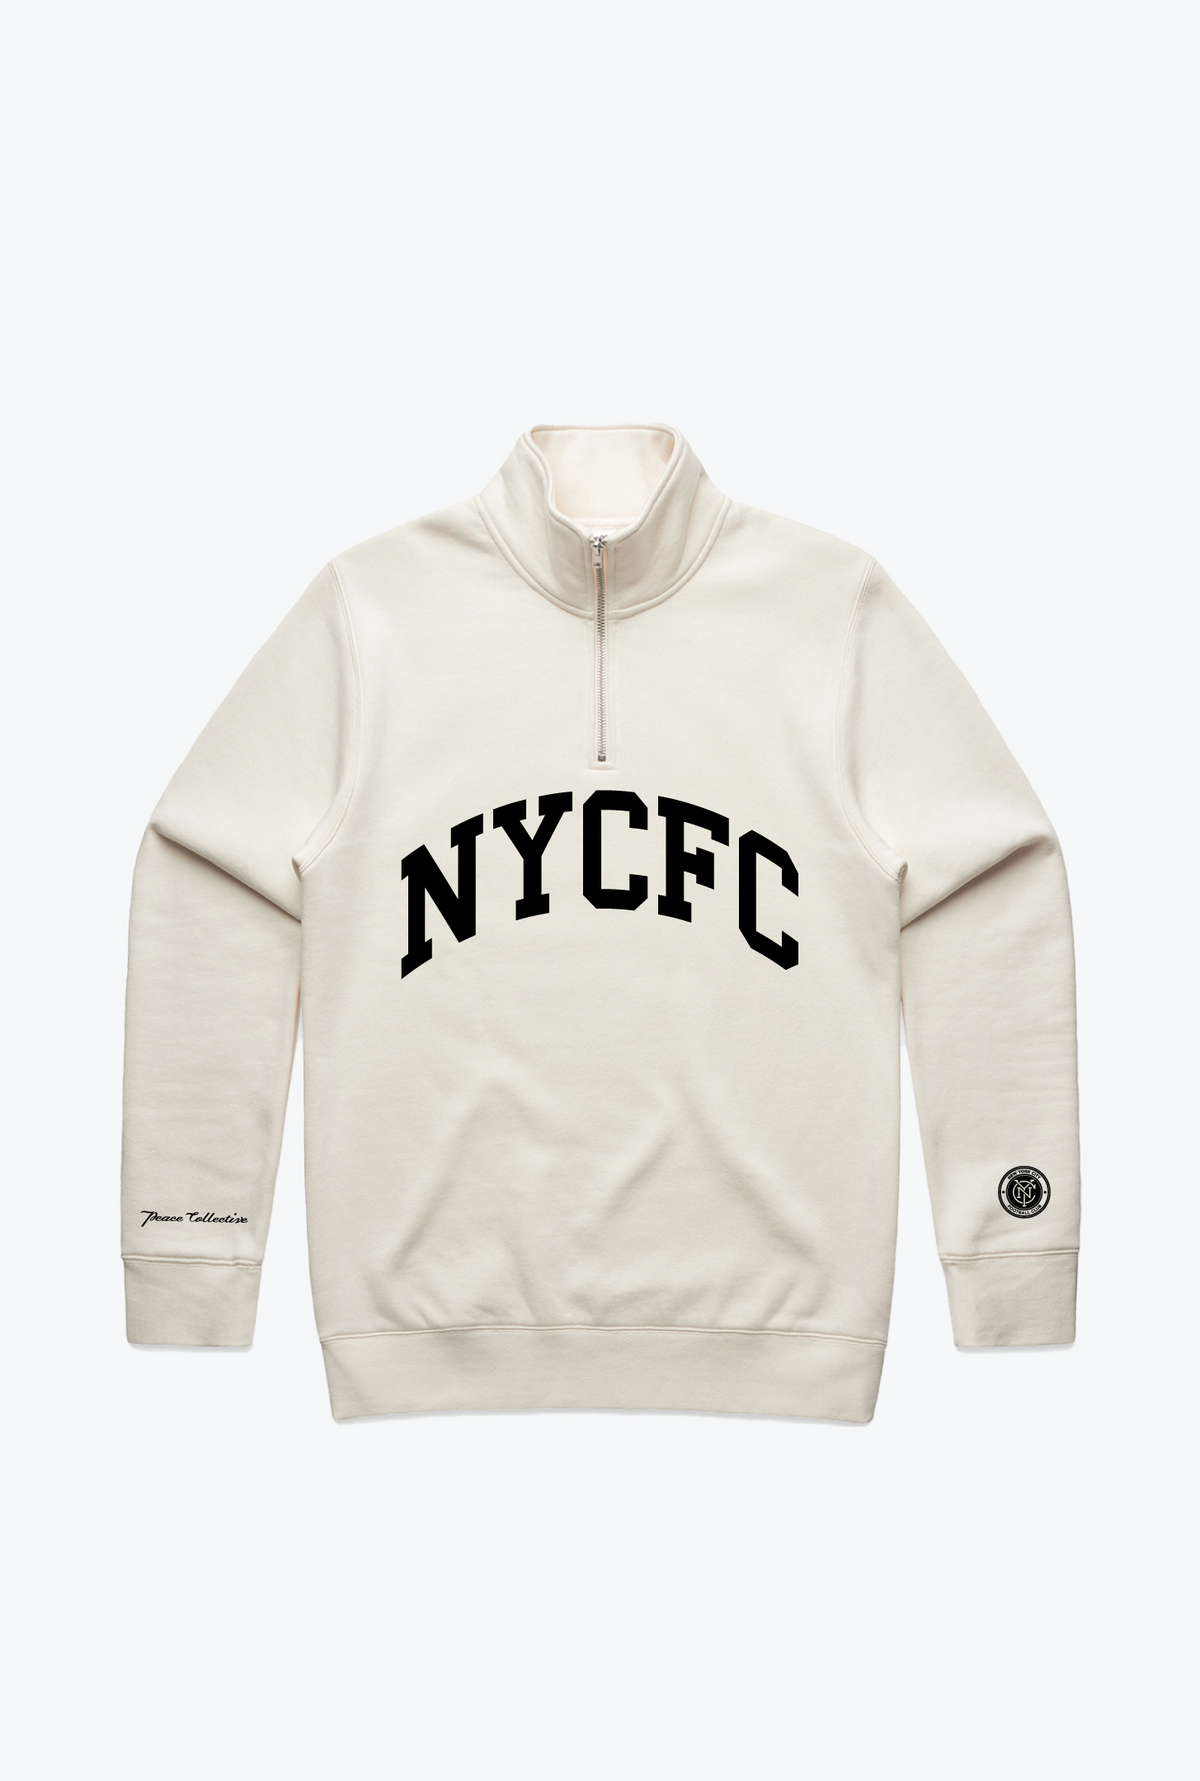 New York FC Collegiate Quarter Zip - Ivory